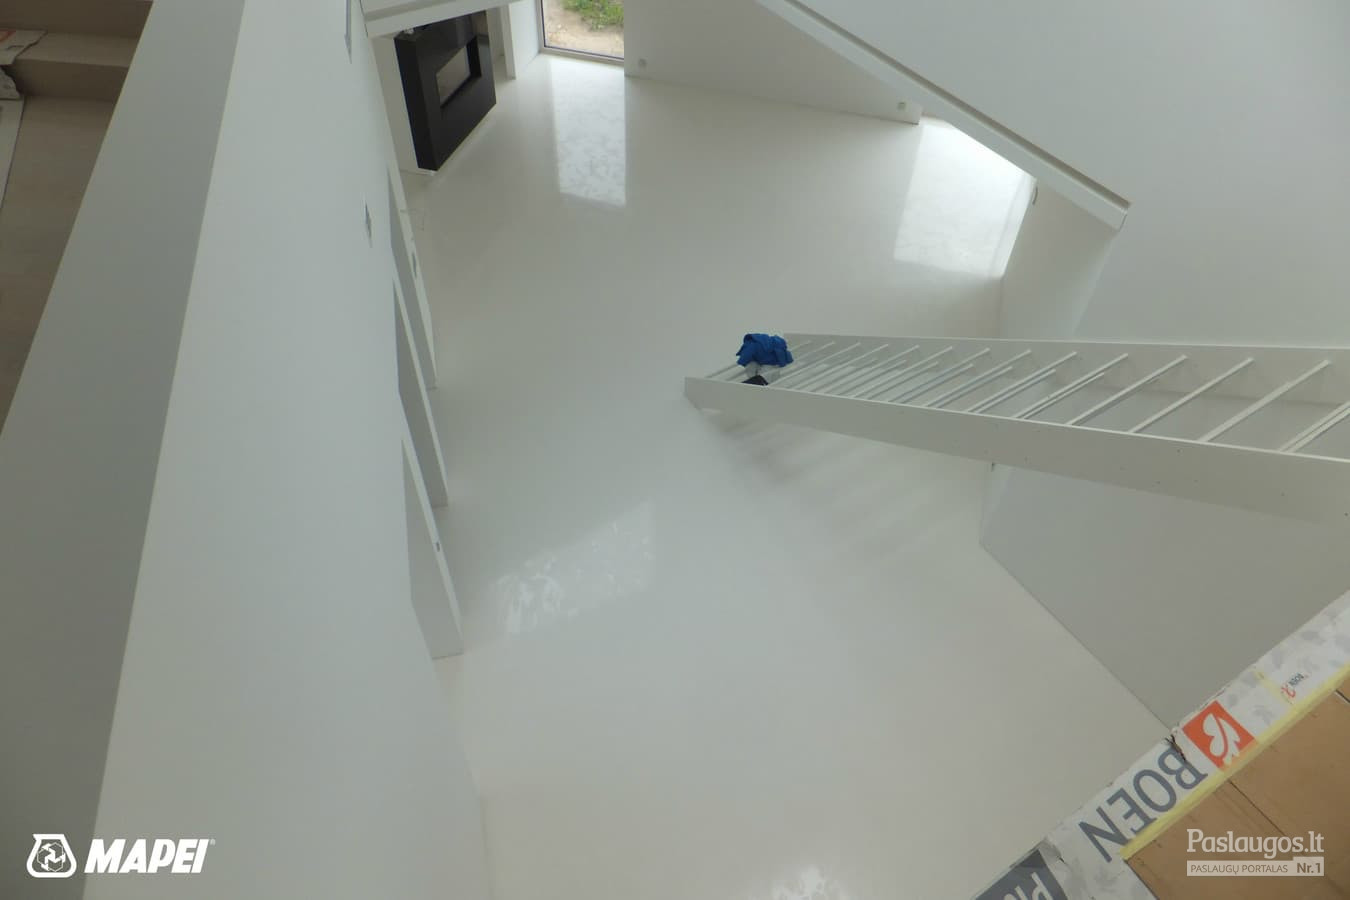 MAPEFLOOR SL savaime išsilyginanti epoksidinė grindų danga (balta) . Gyvenamasis namas.
http://velvemst.lt/uploads/Mapefloor_SL_lt.pdf